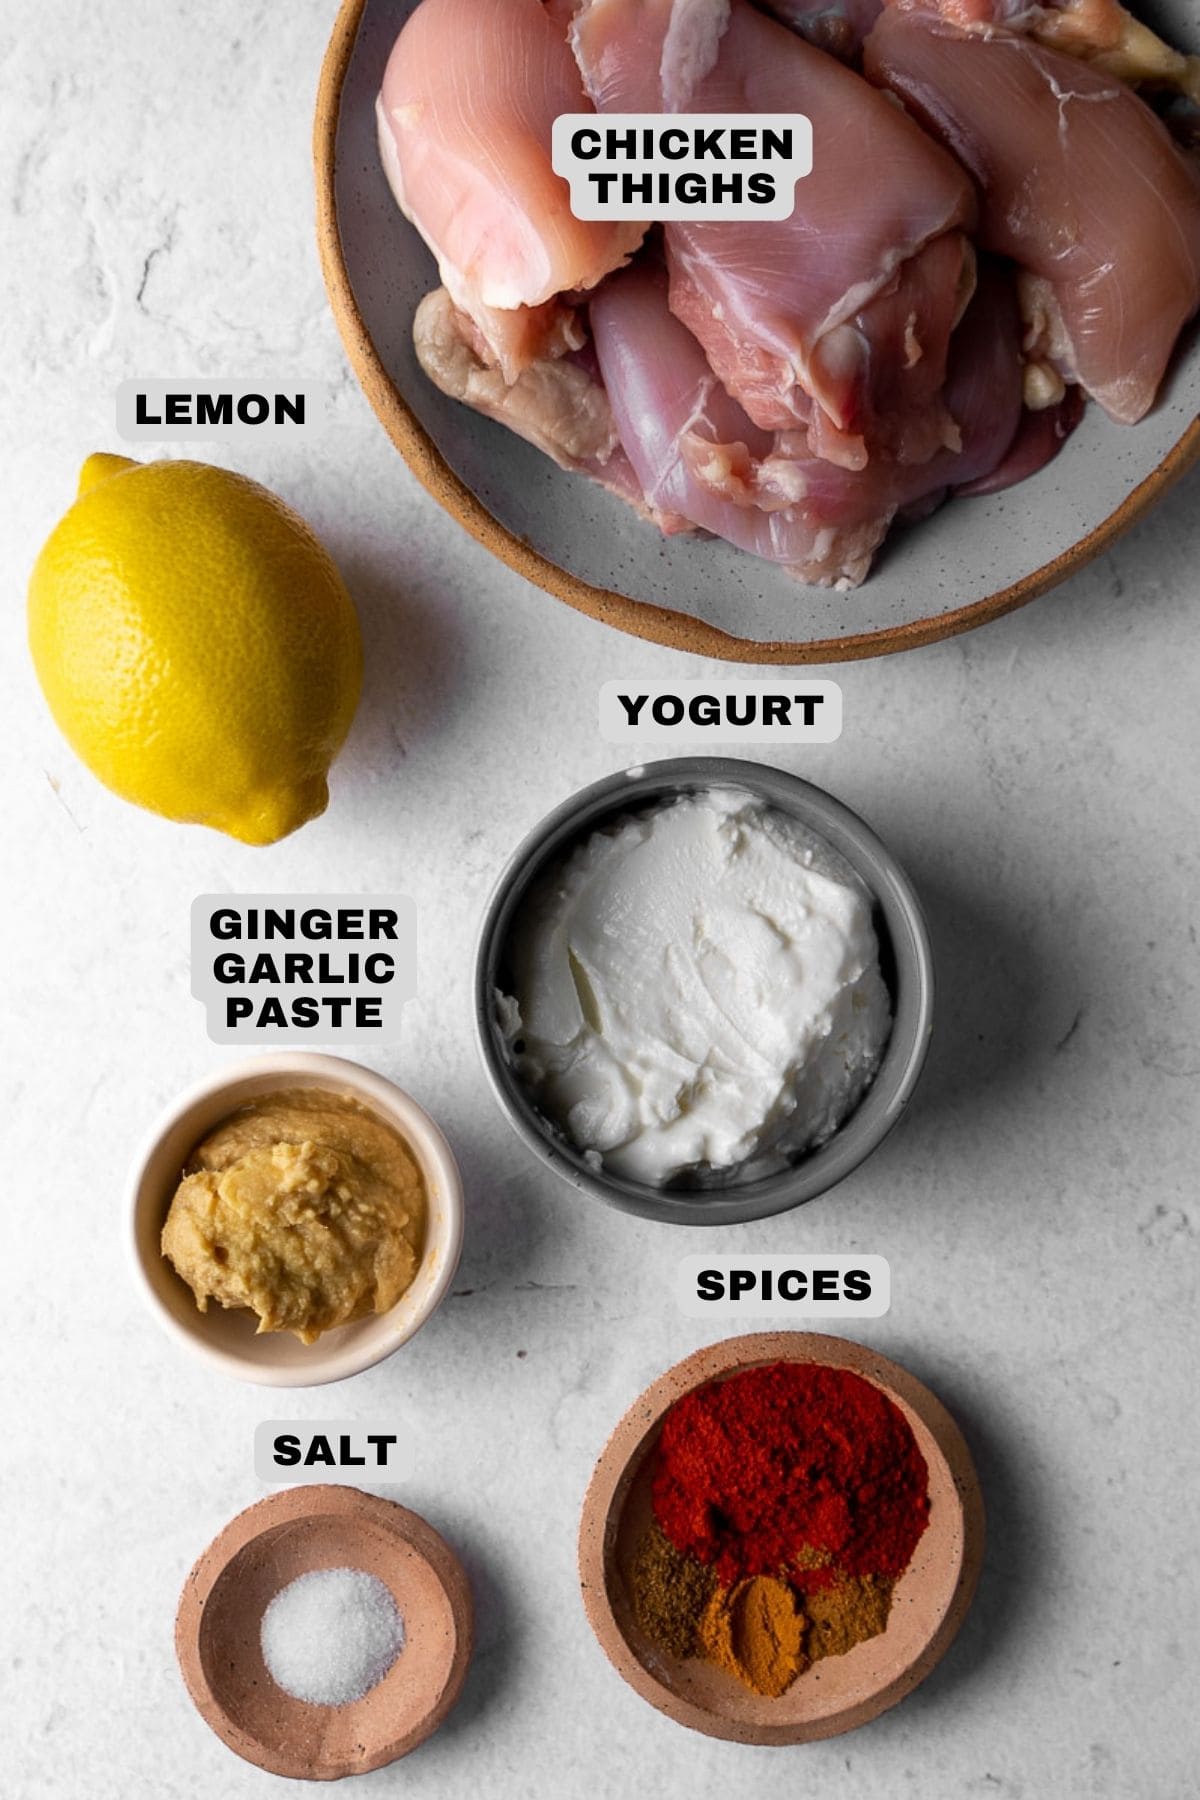 Chicken thighs, lemon, yogurt, ginger garlic paste, spices, salt ingredients with labels.